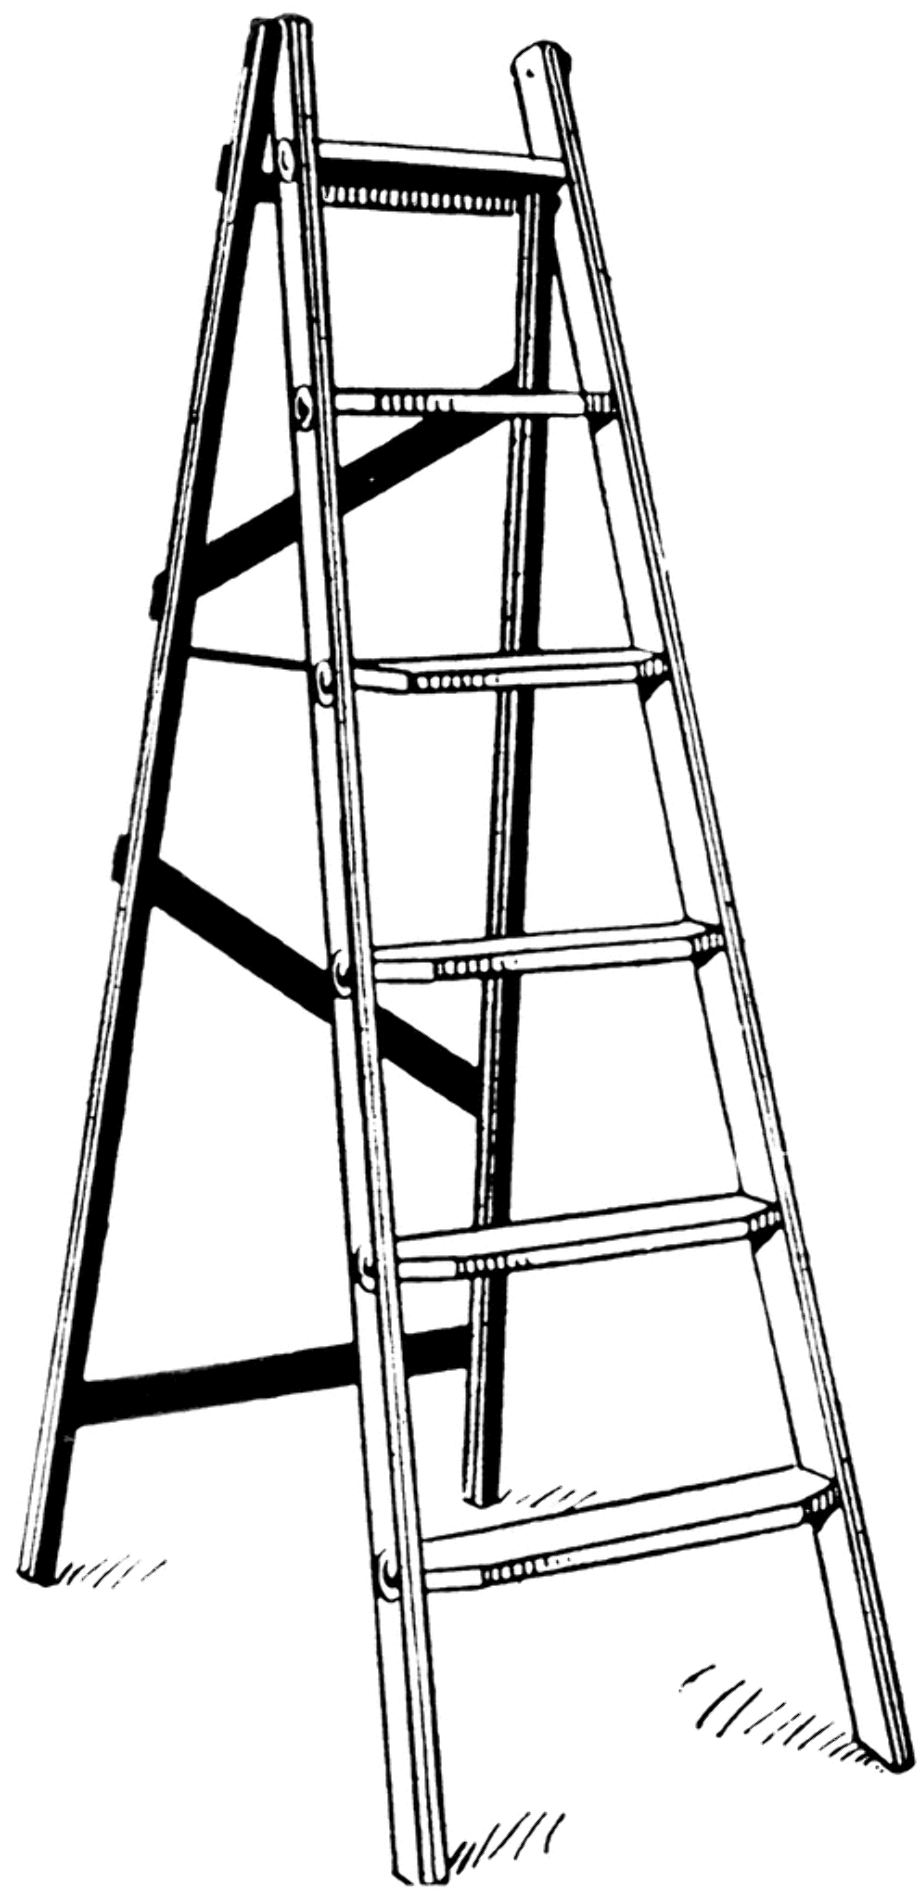 ladder clipart safety